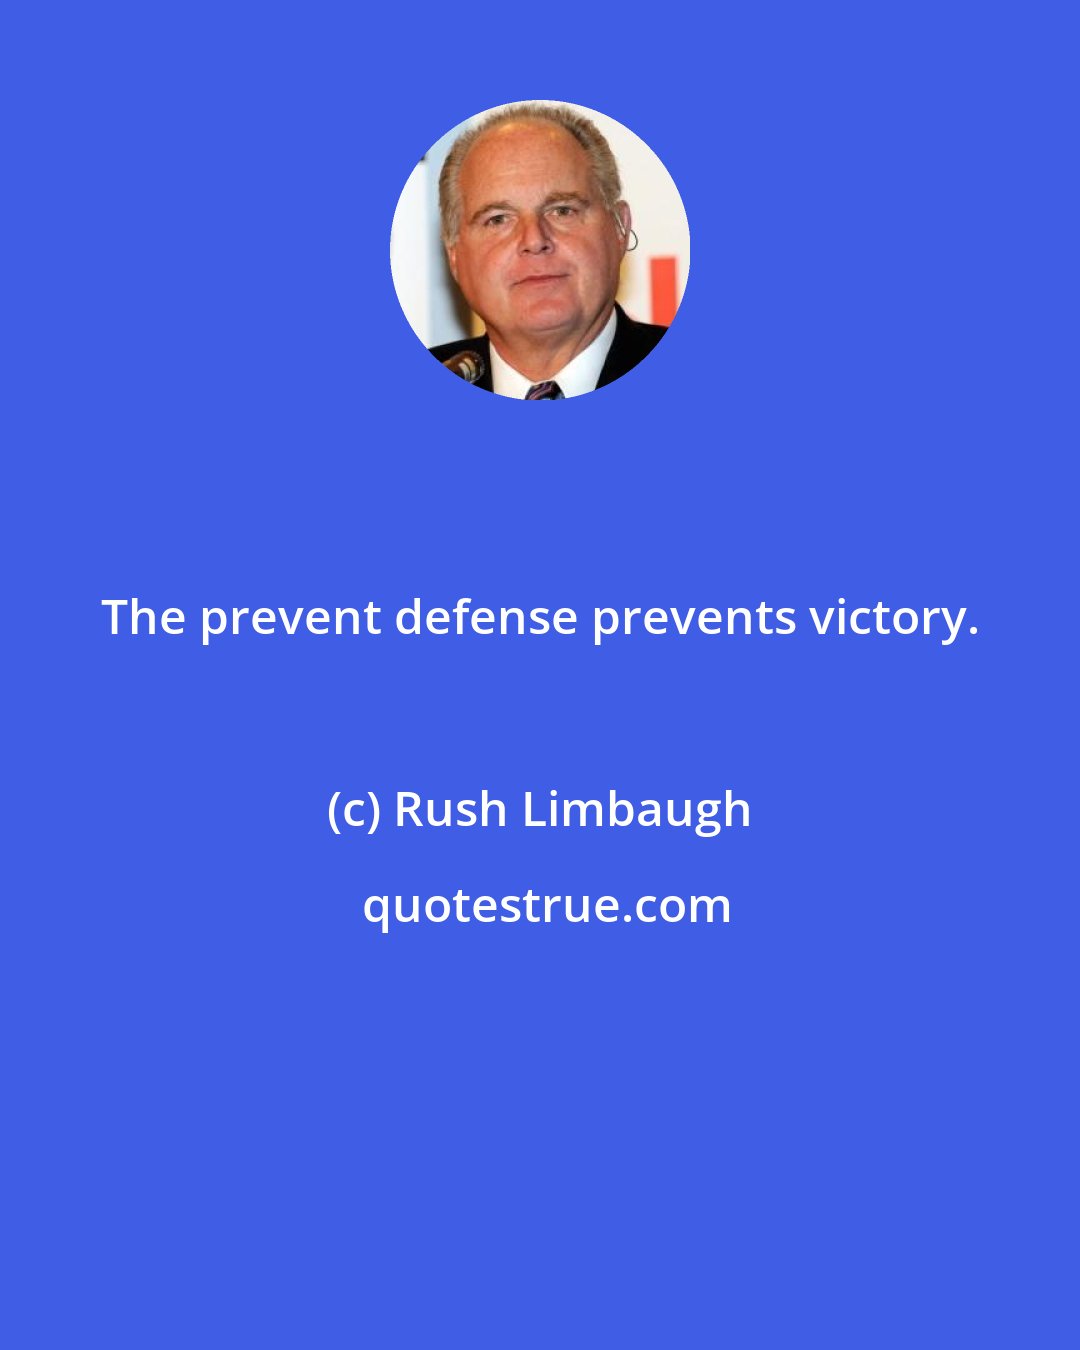 Rush Limbaugh: The prevent defense prevents victory.